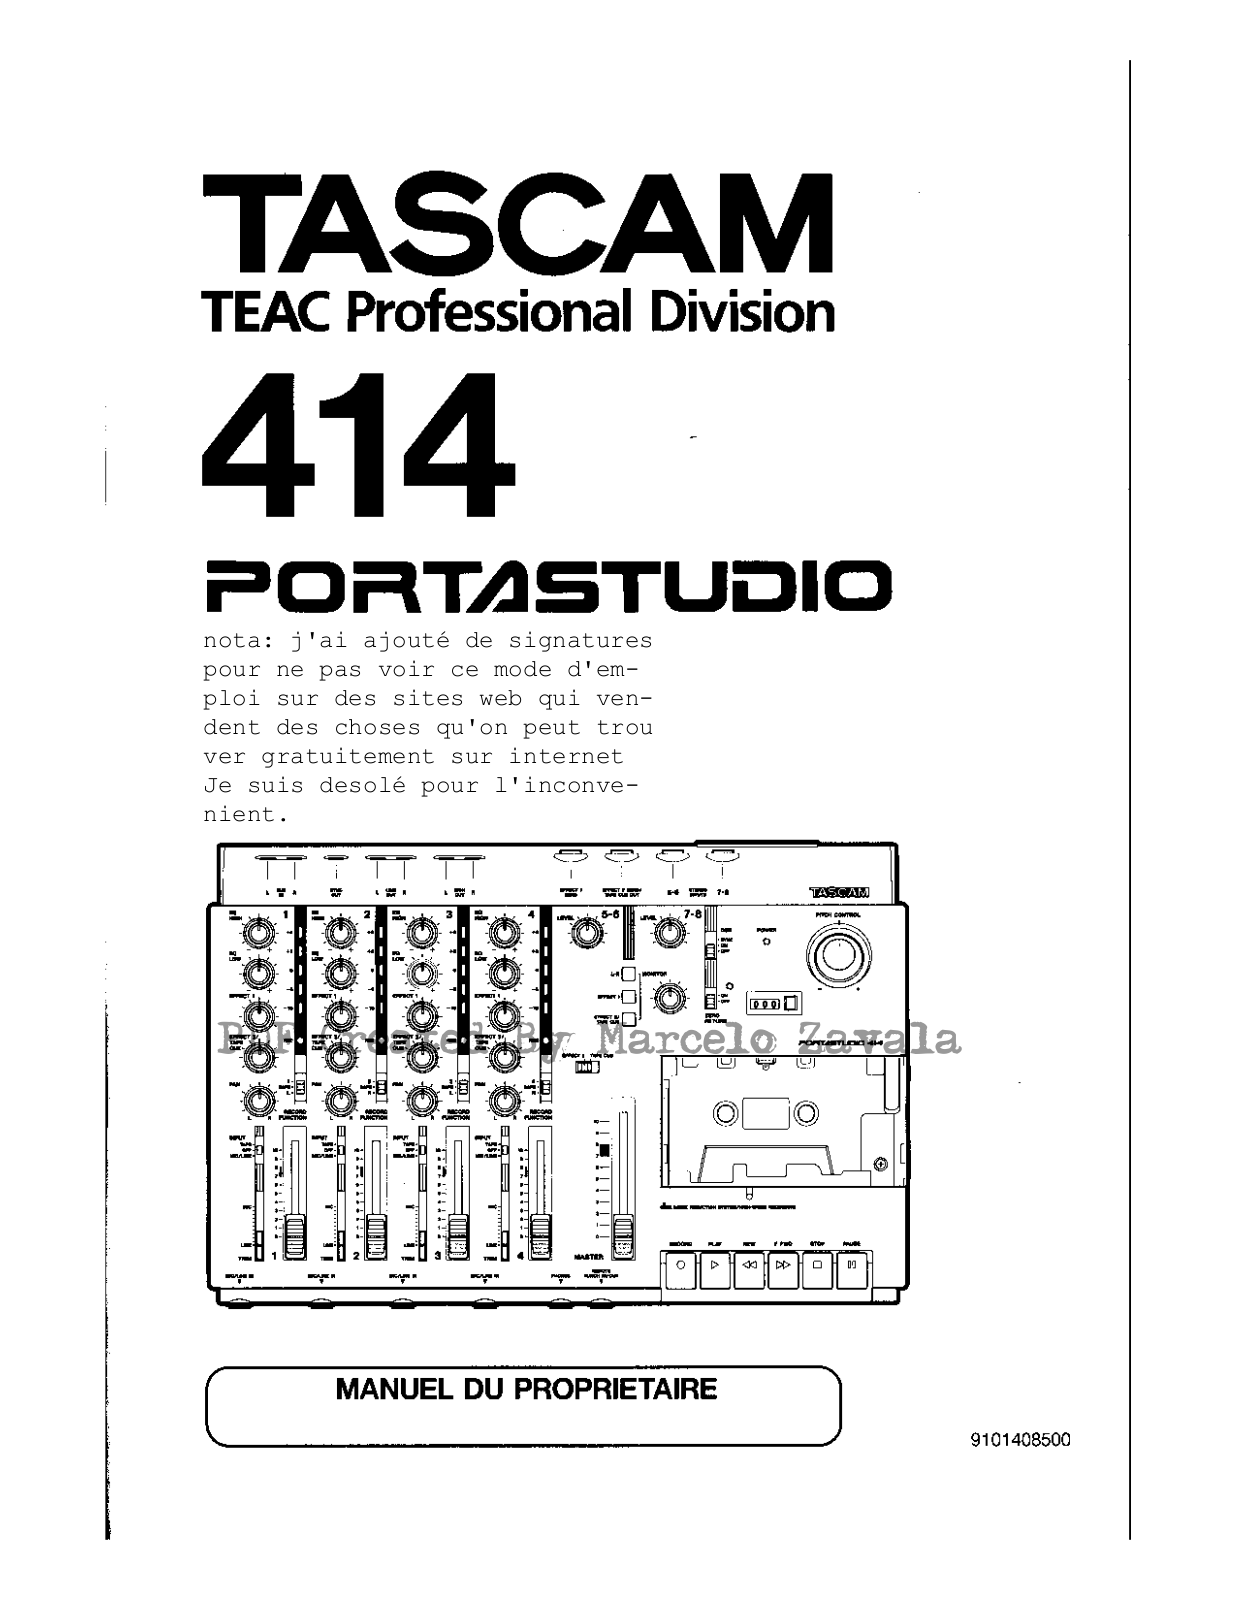 TASCAM 414 PORTASTUDIO User Manual